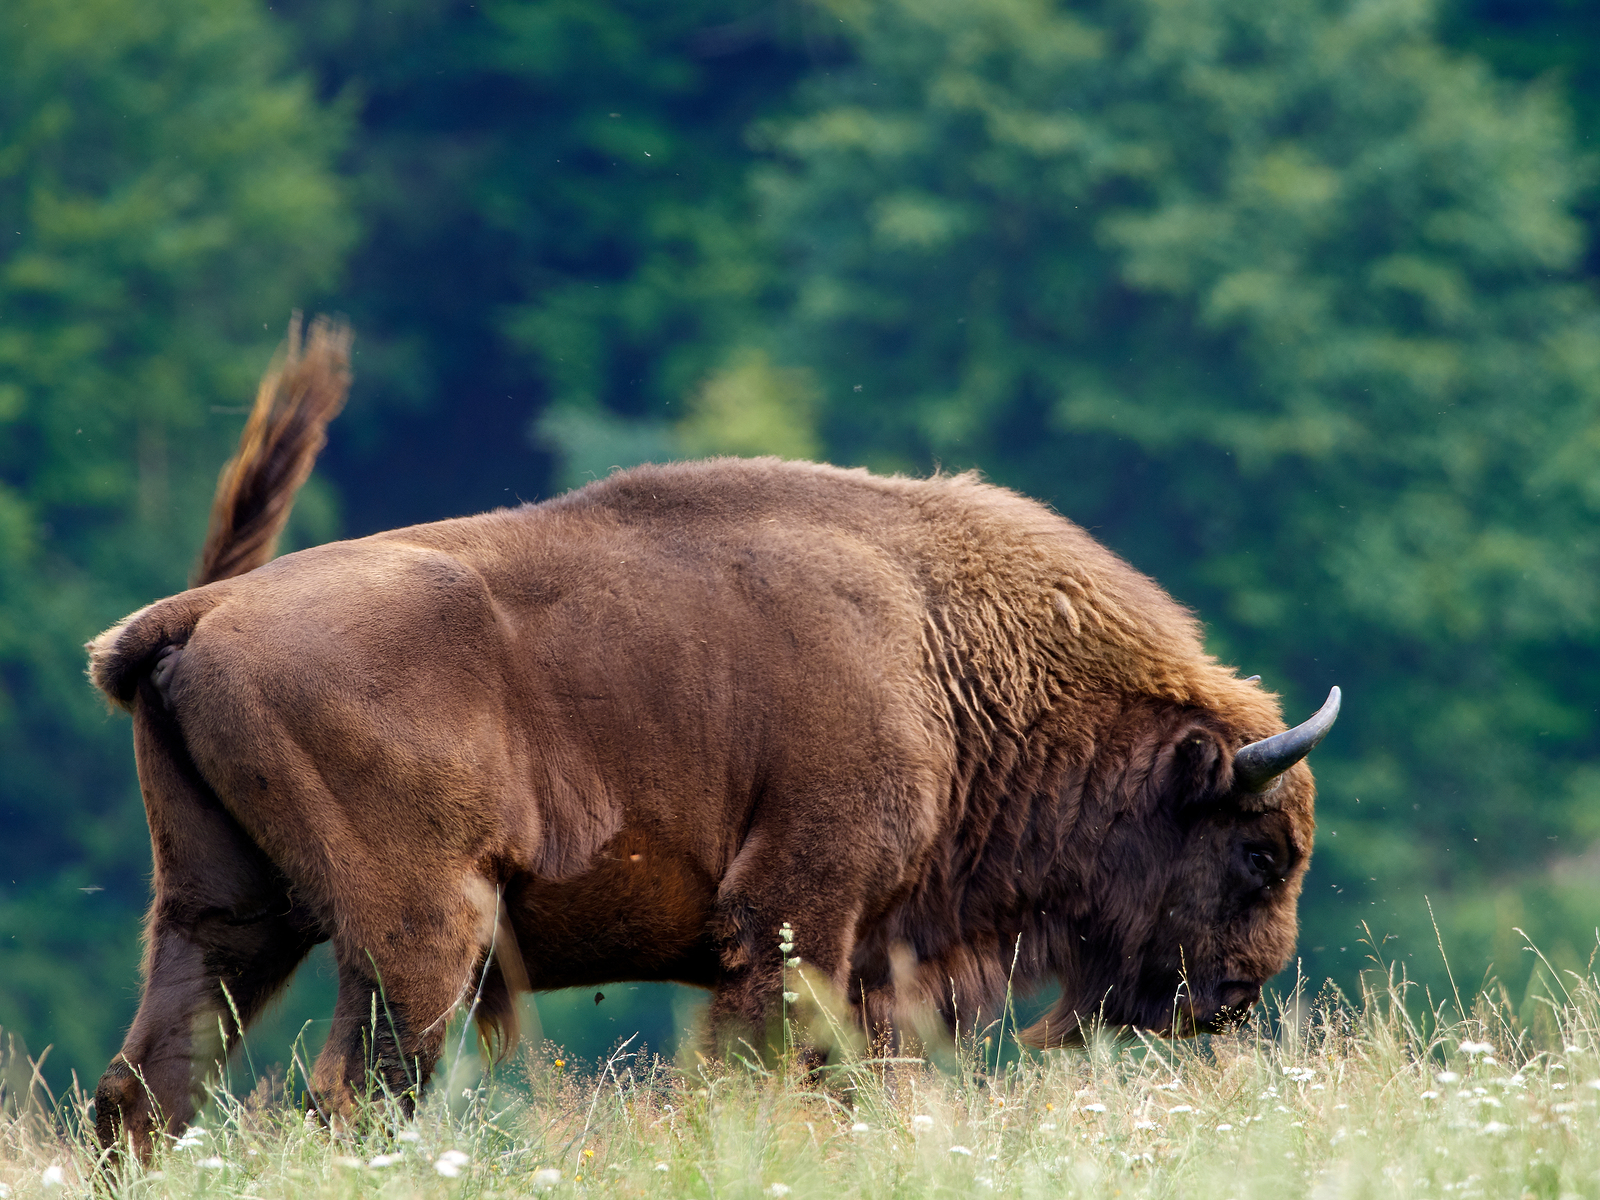 bison-rewilding-programme-in-romania-enjoys-new-success-emerging-europe